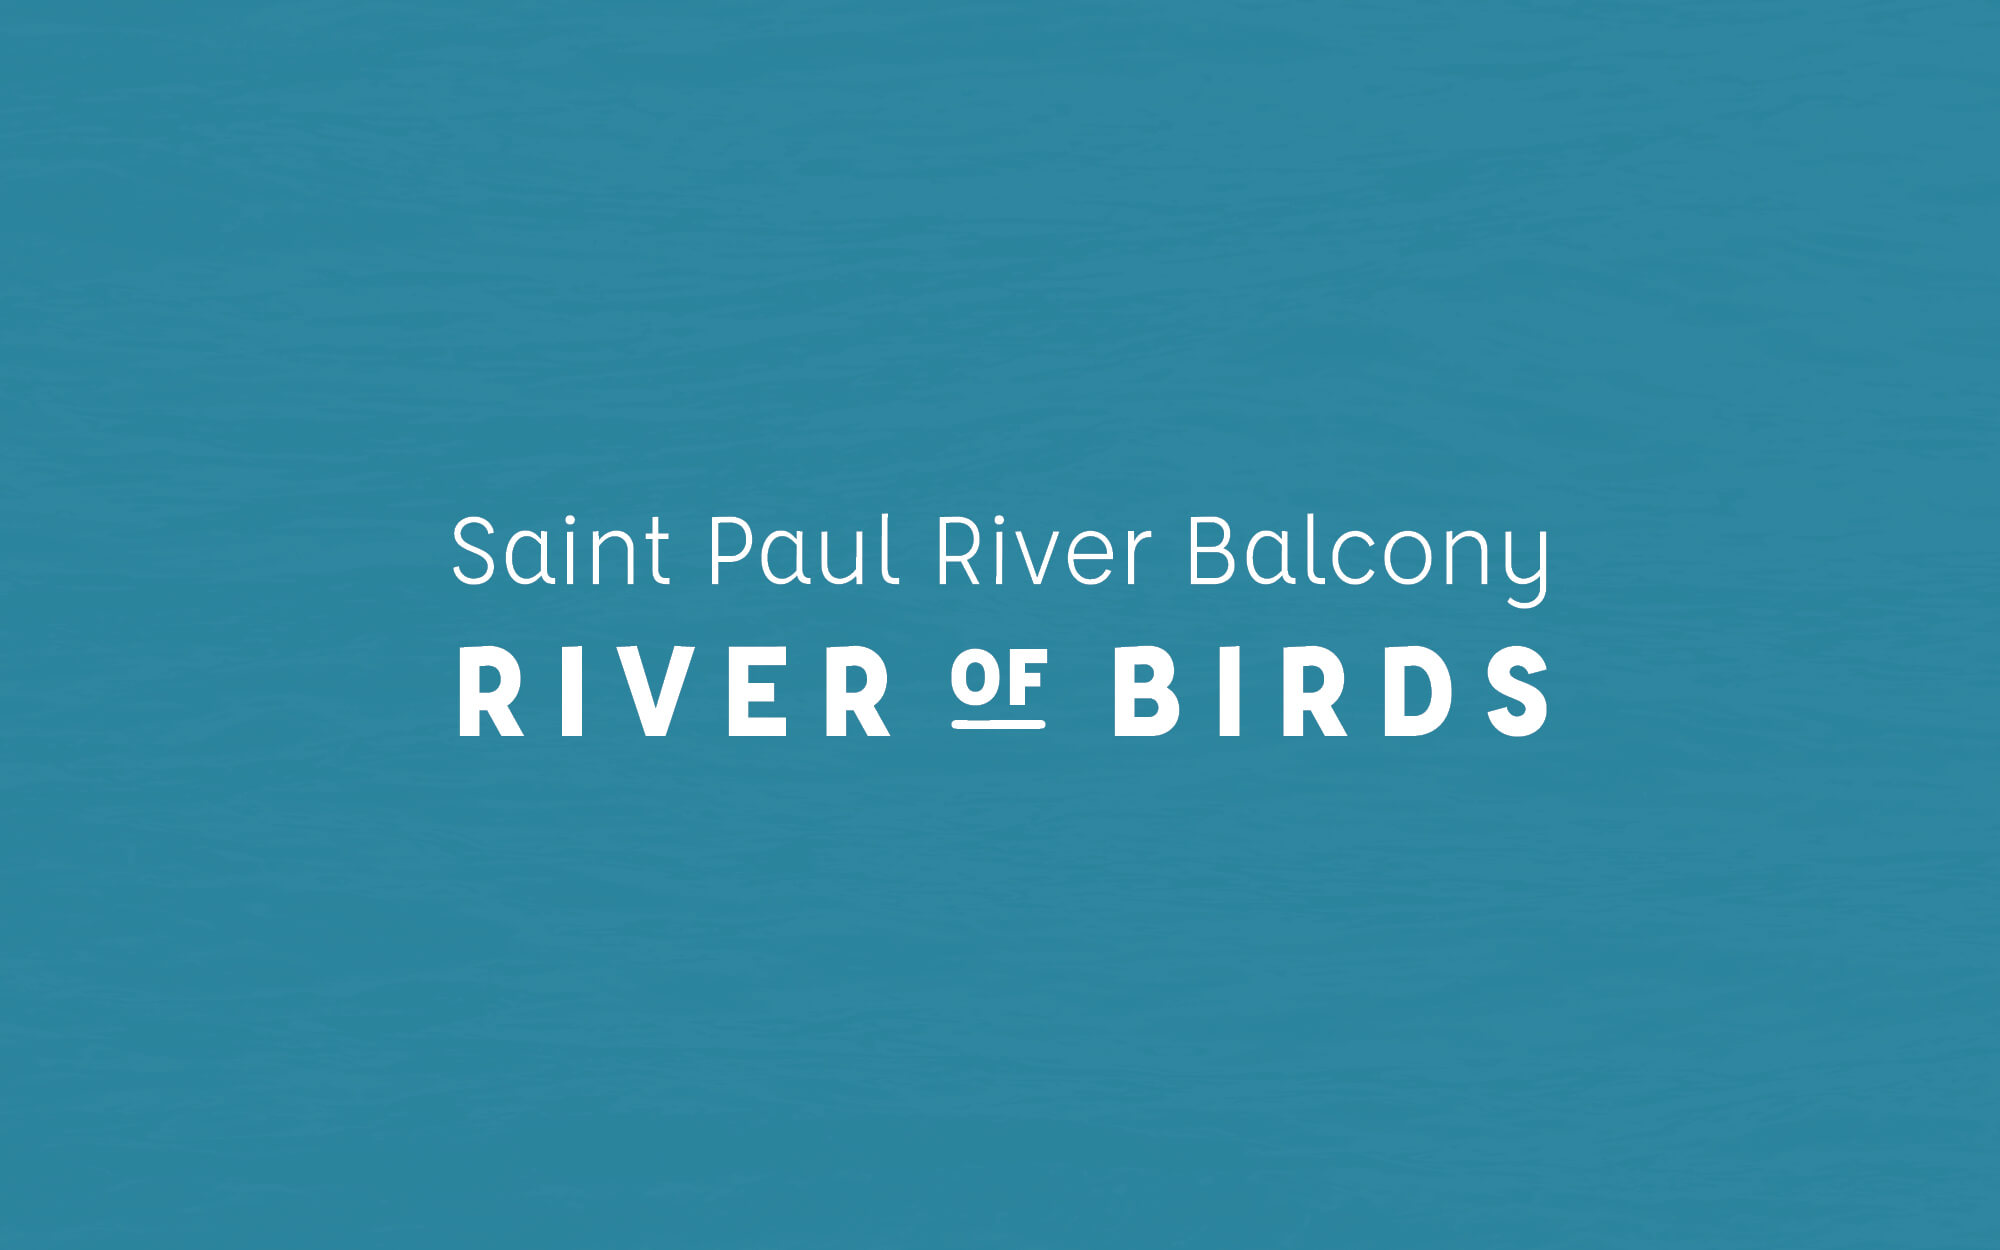 River of Birds logo image